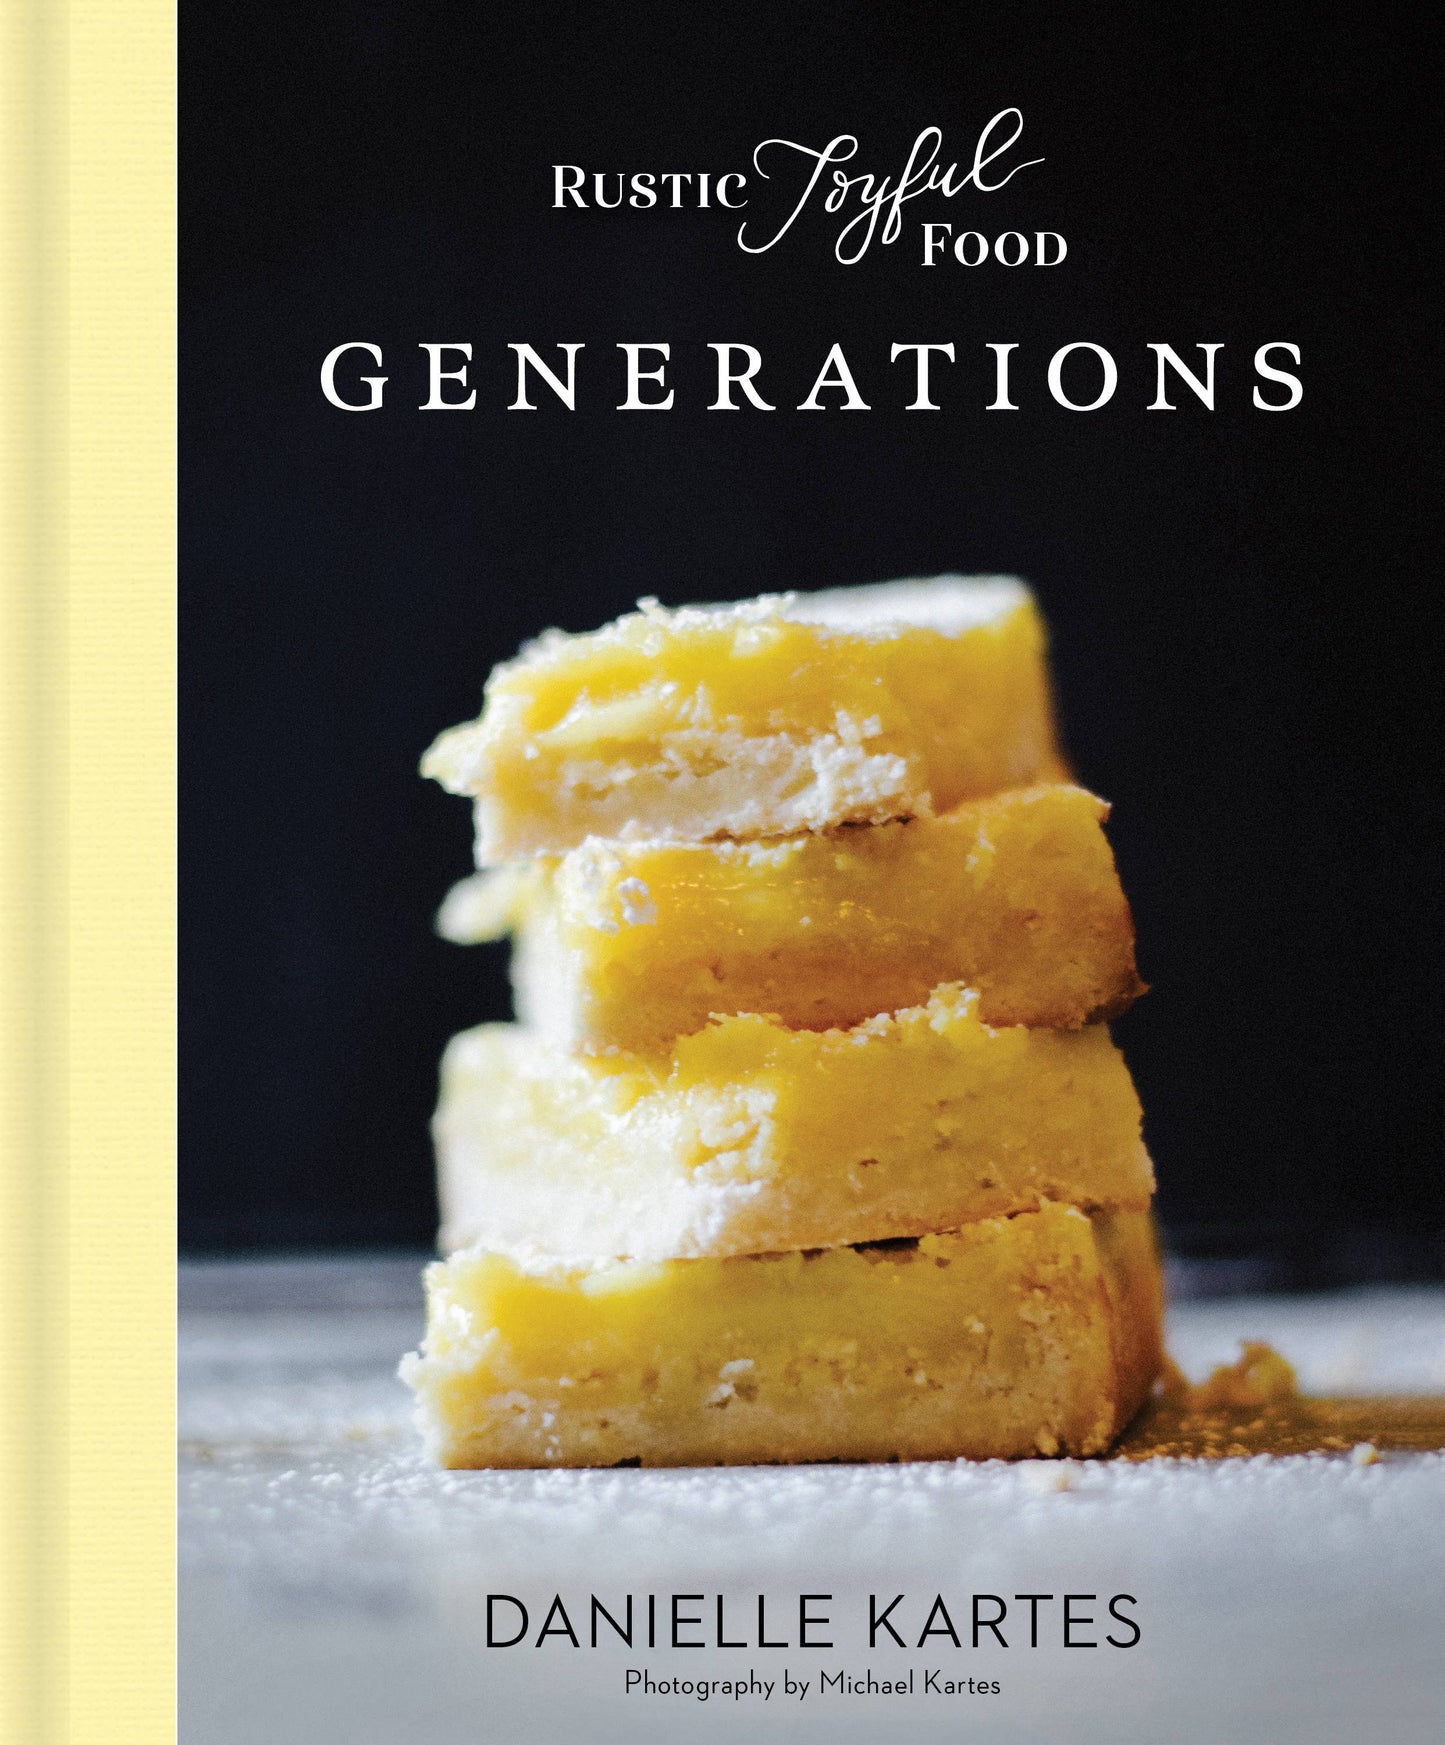 Sourcebooks - Rustic Joyful Food: Generations (HC)